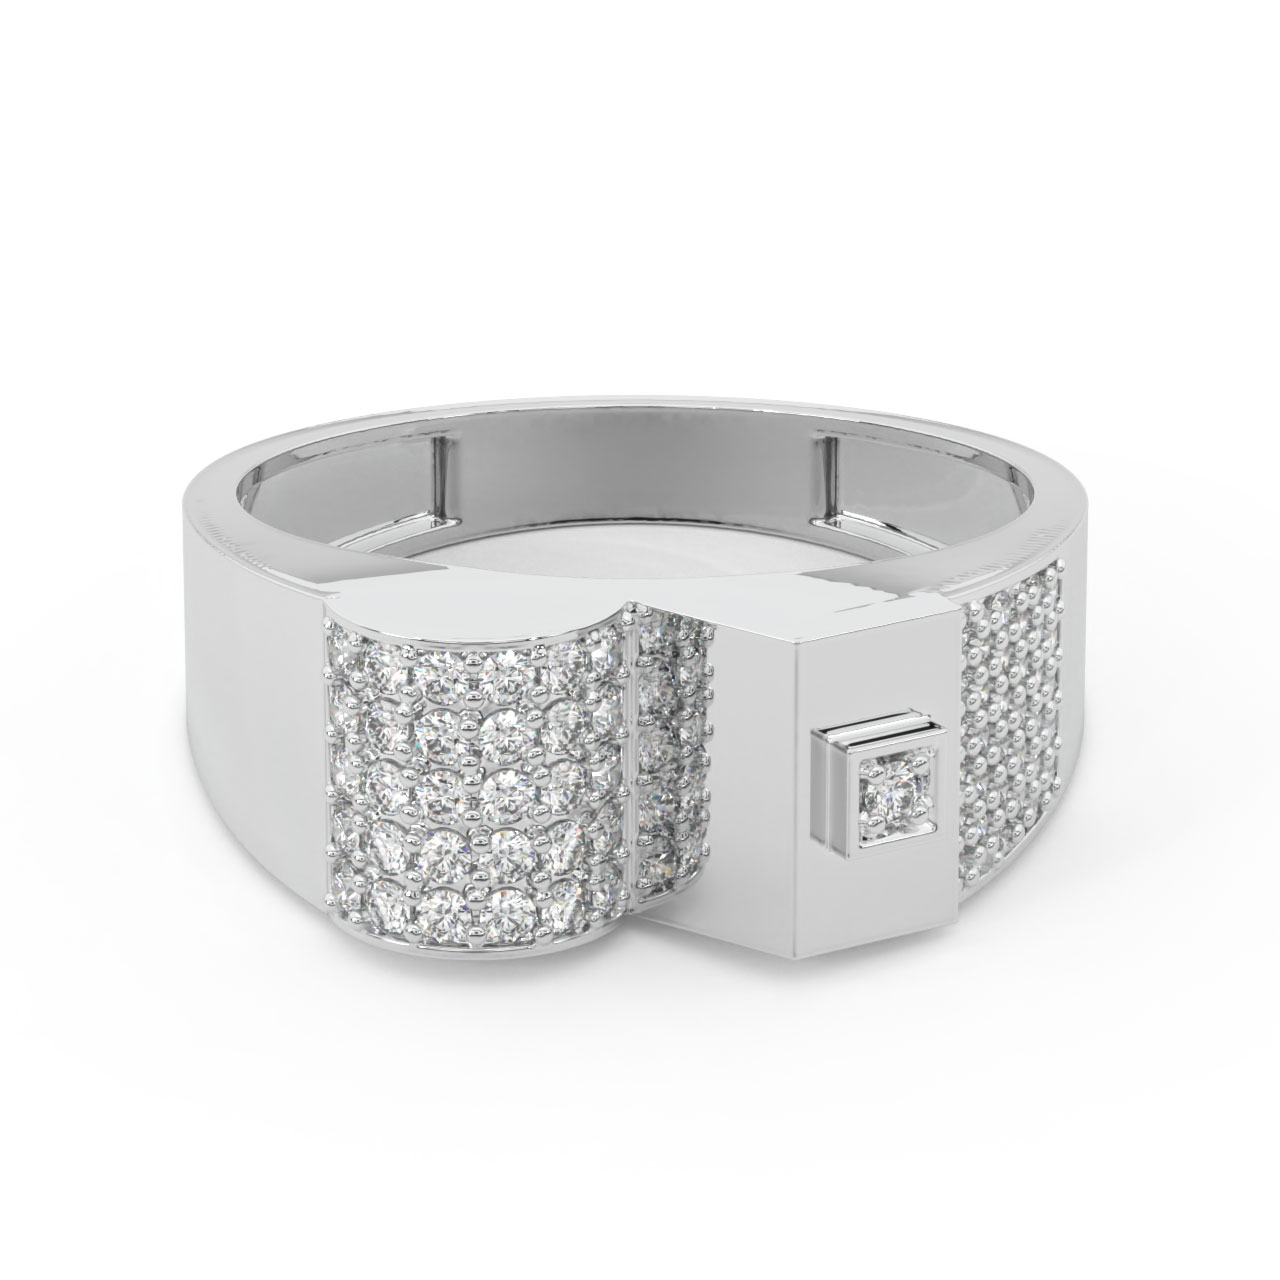 Nesim Diamond Engagement Ring For Him